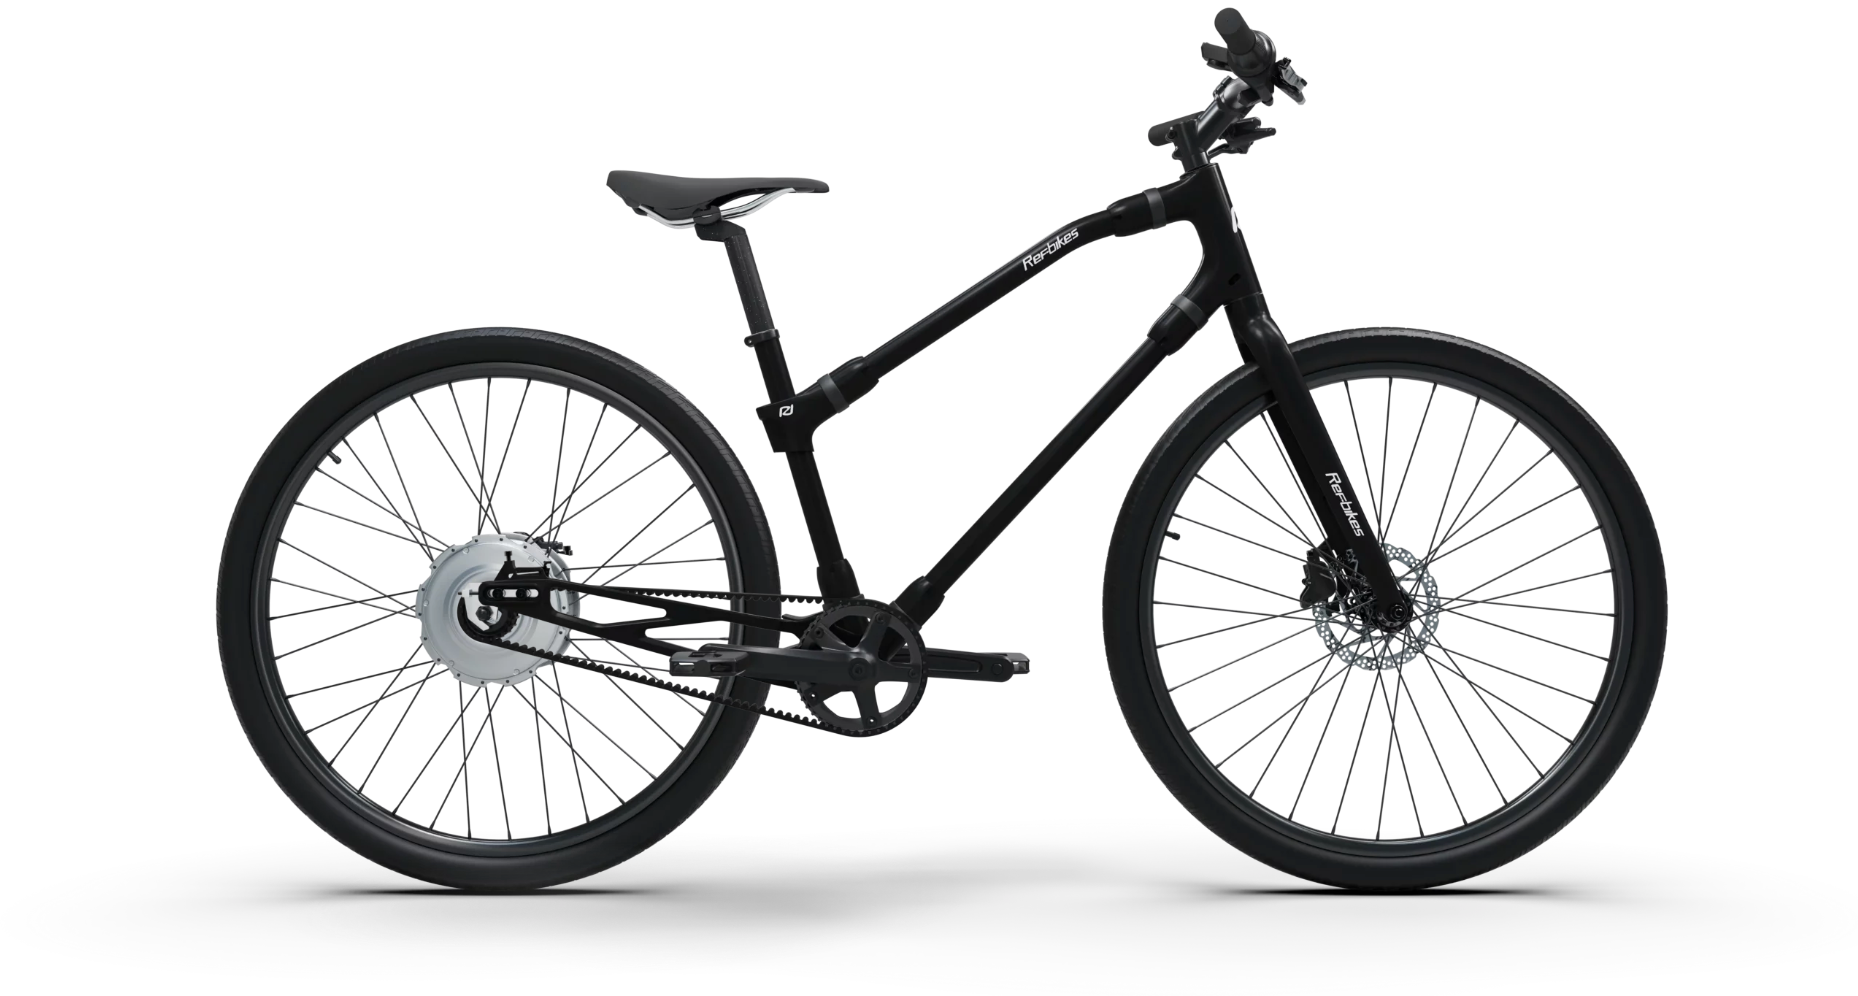 Sleek black Essential Boost bike displayed on a white background, highlighting its streamlined design.